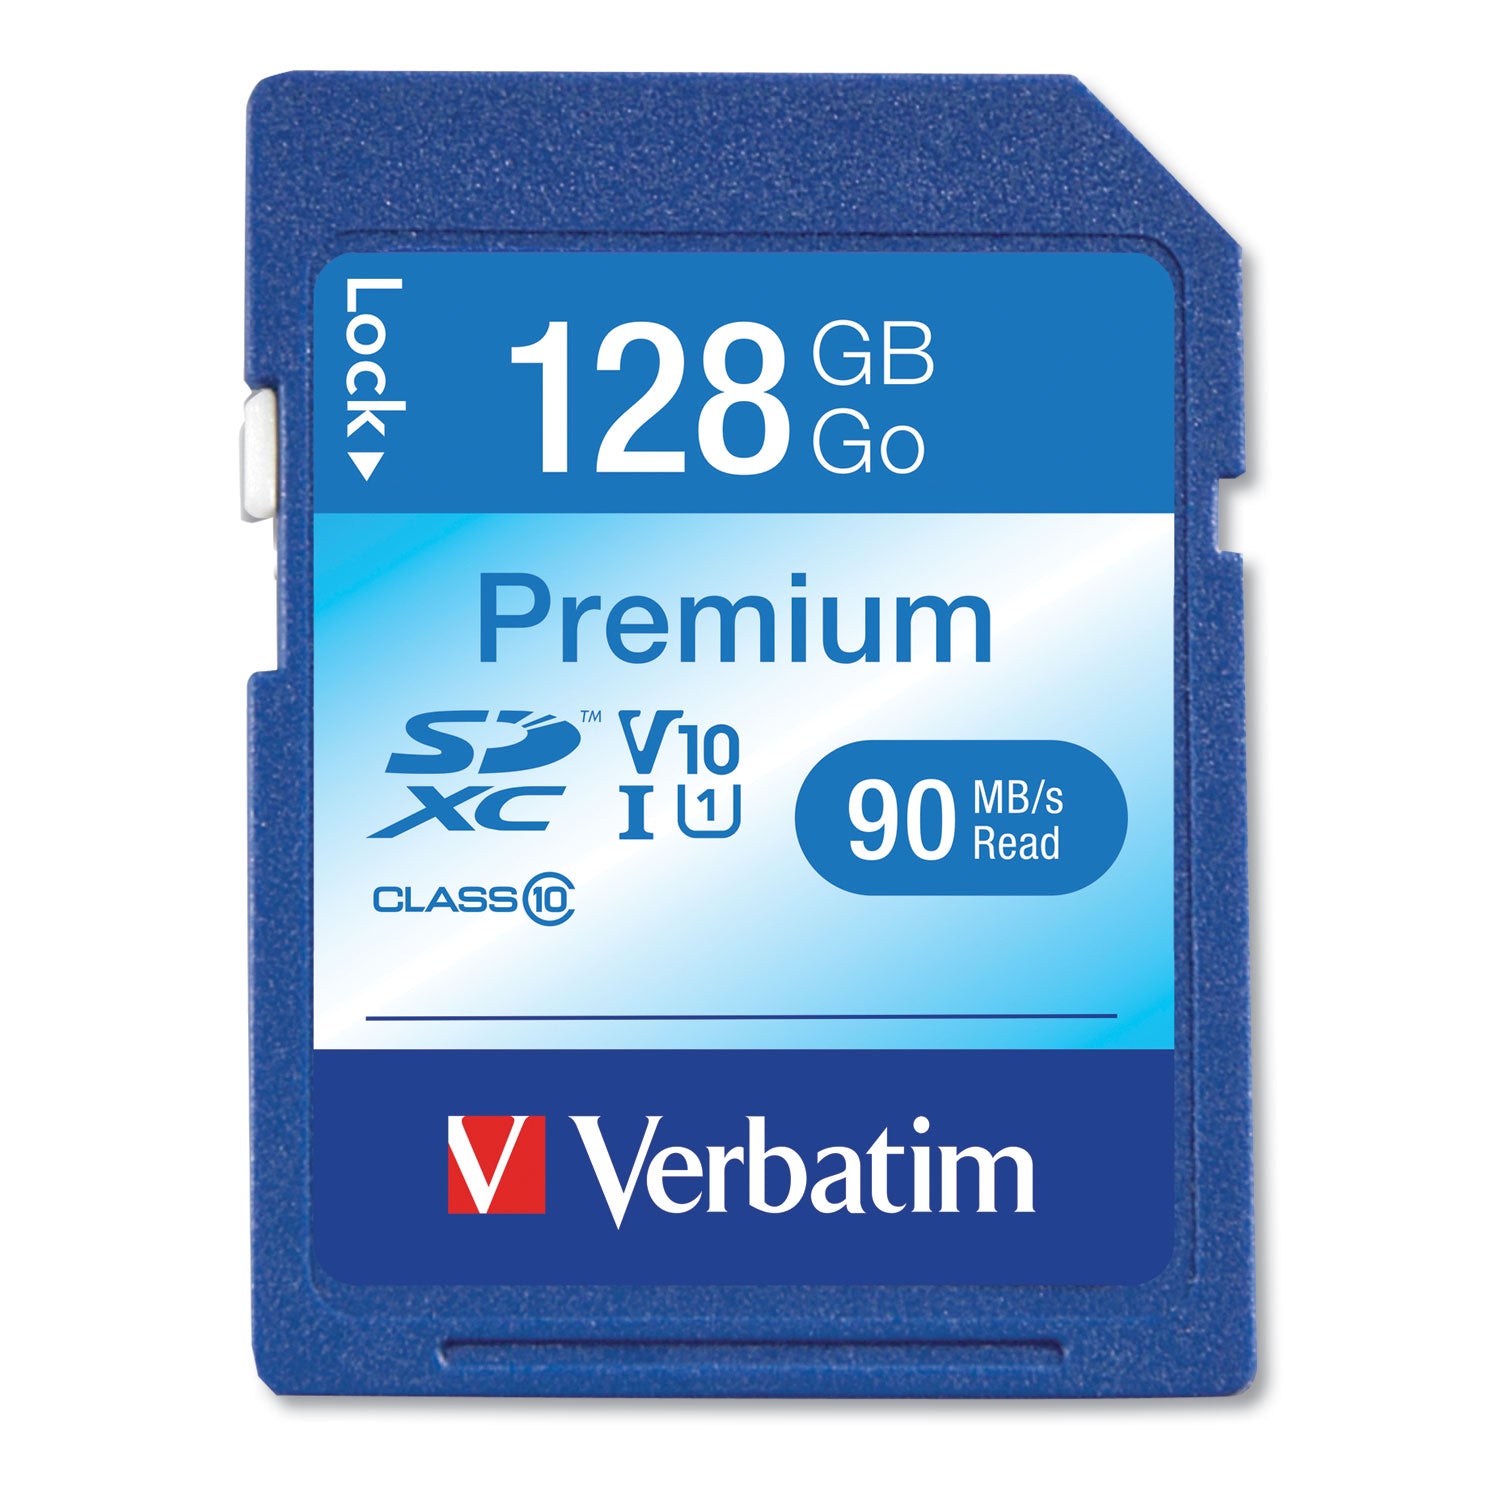 128gb-premium-sdxc-memory-card-uhs-i-v10-u1-class-10-up-to-90mb-s-read-speed_ver44025 - 1